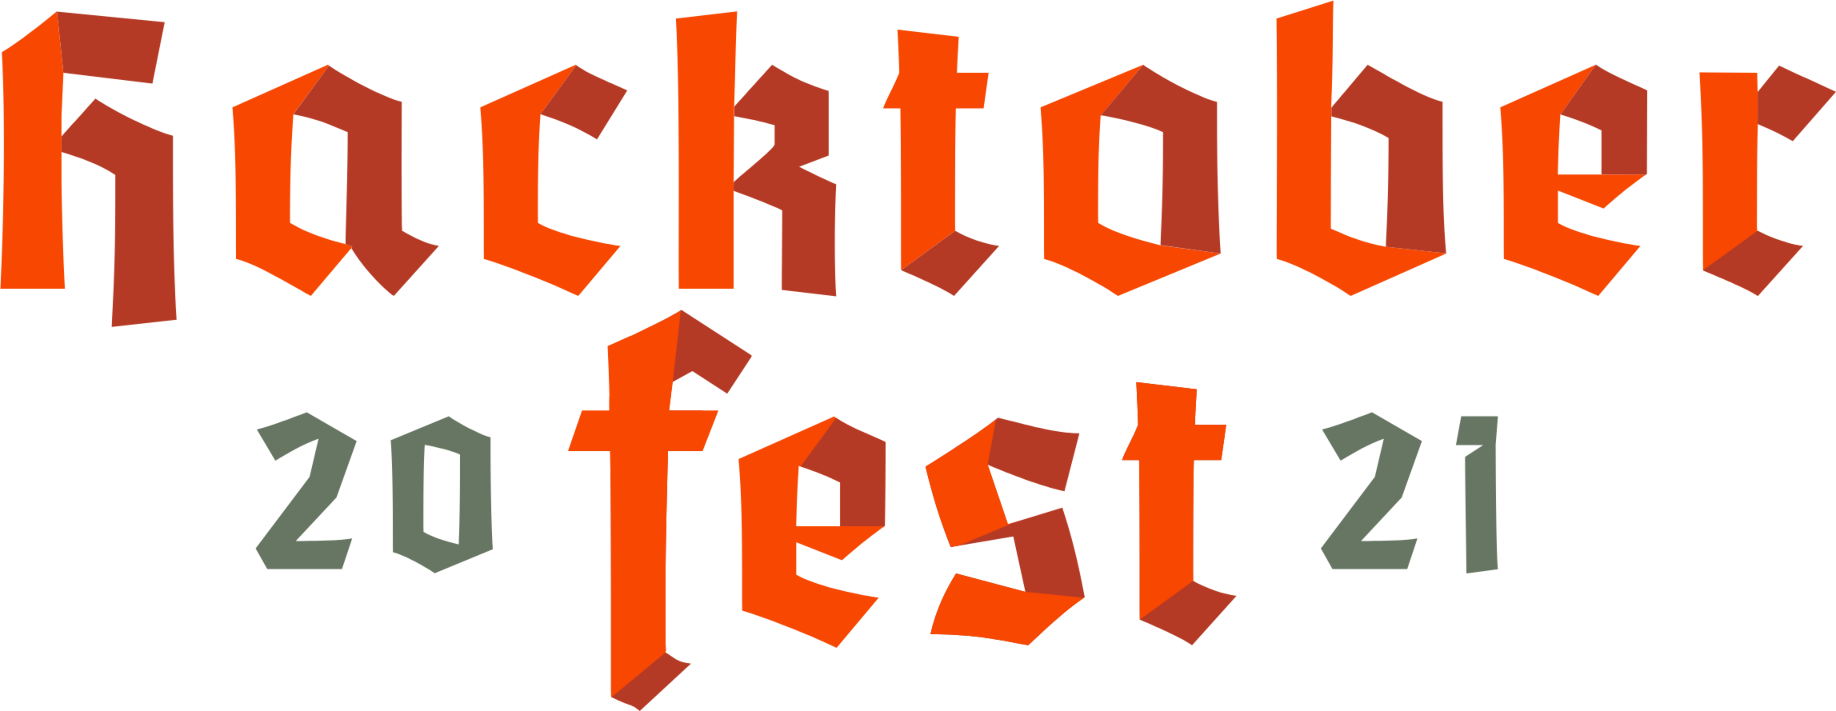 Hacktoberfest 2021 Logo